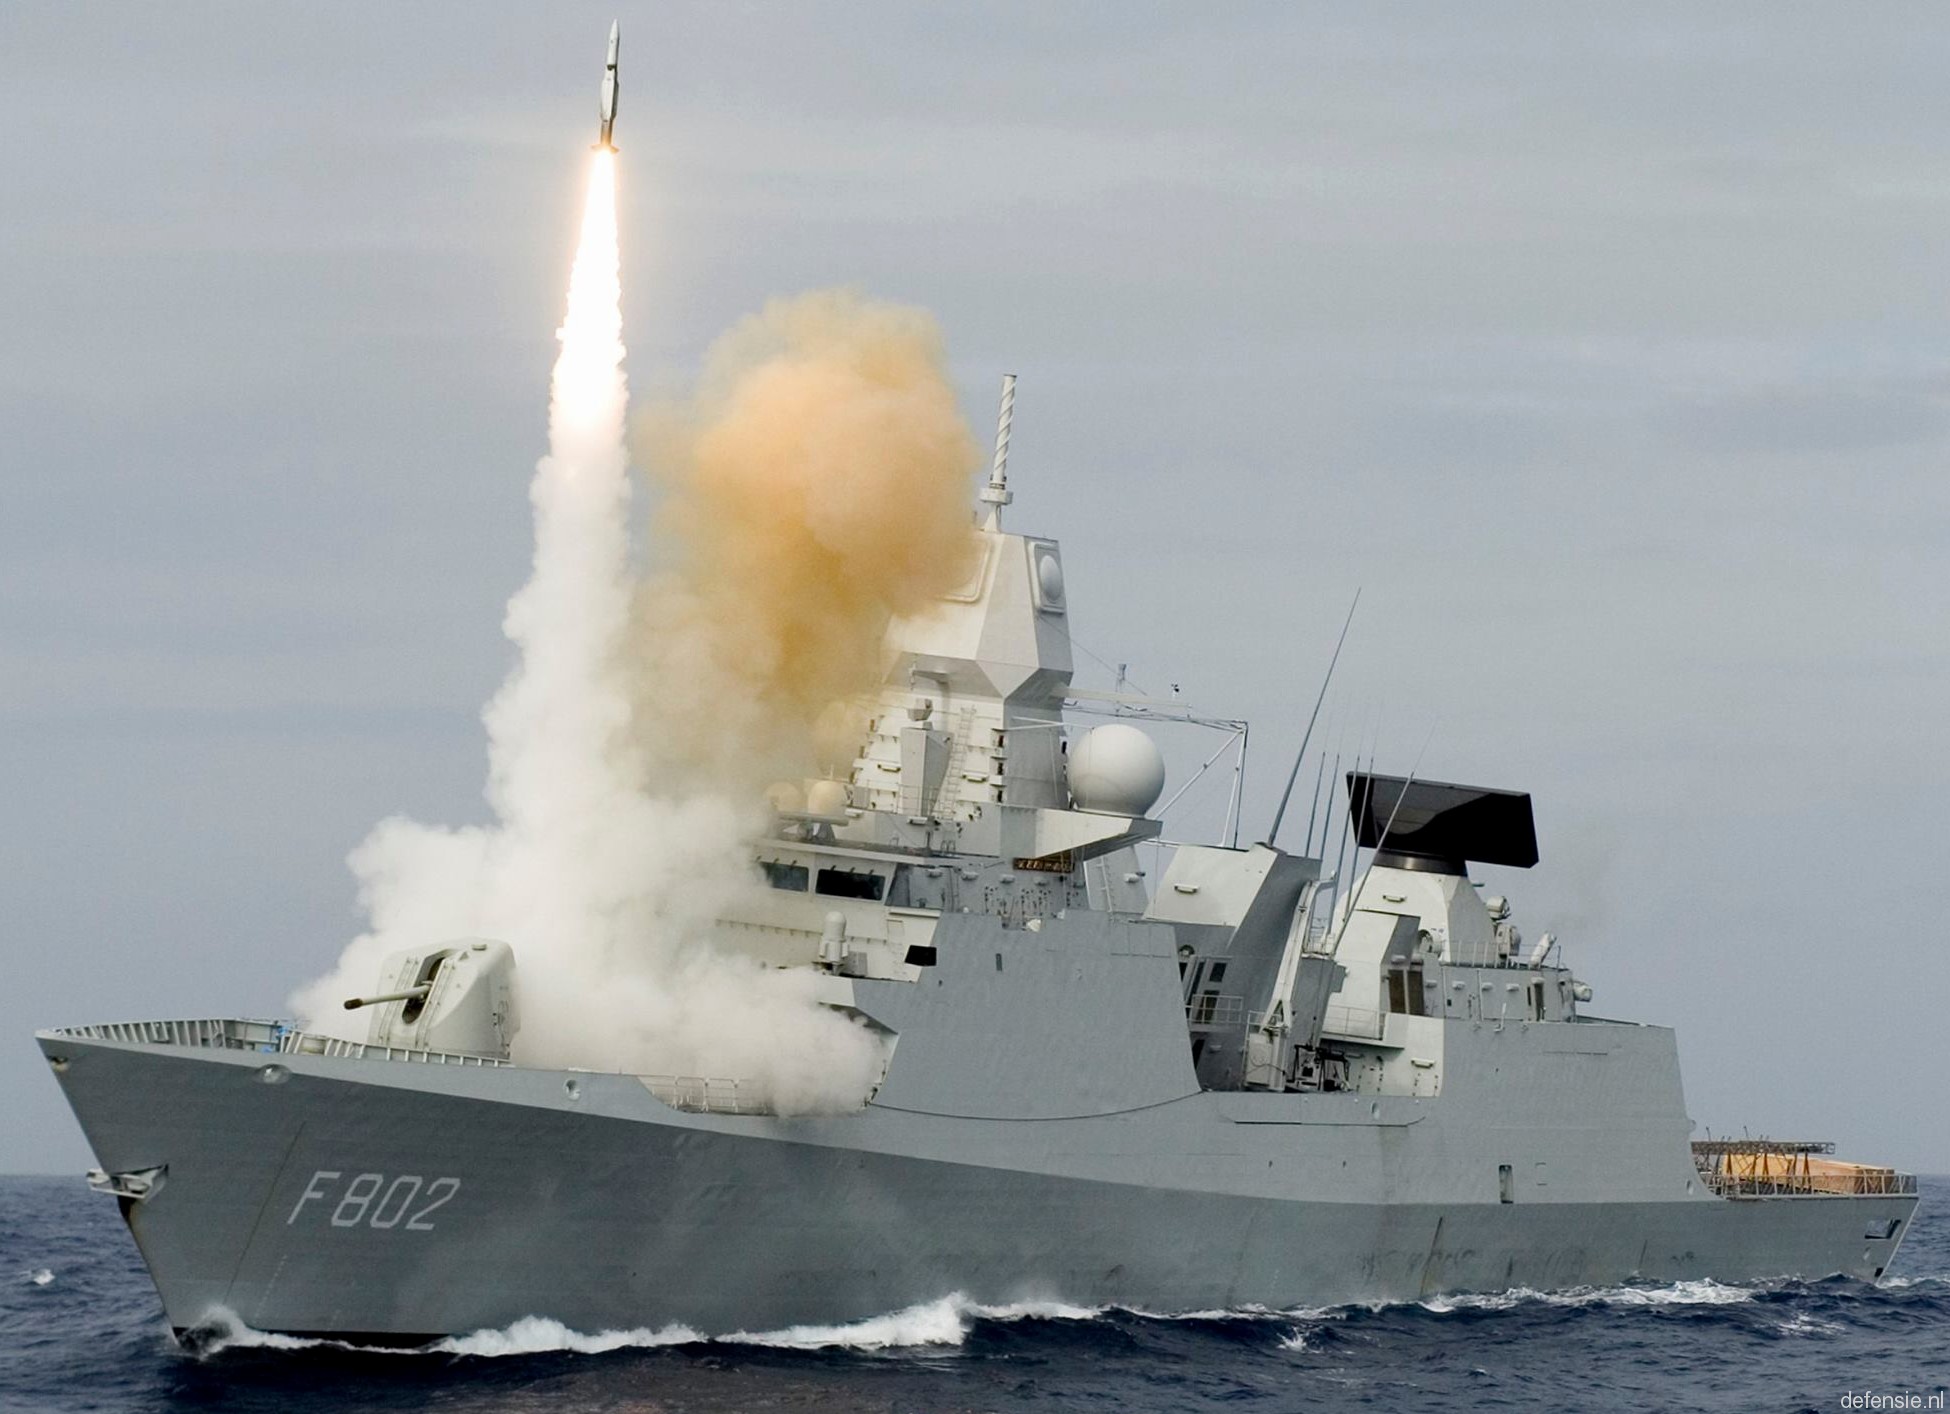 f-802 hnlms de zeven provincien class guided missile frigate ffg lcf air defense royal natherlands navy 08x